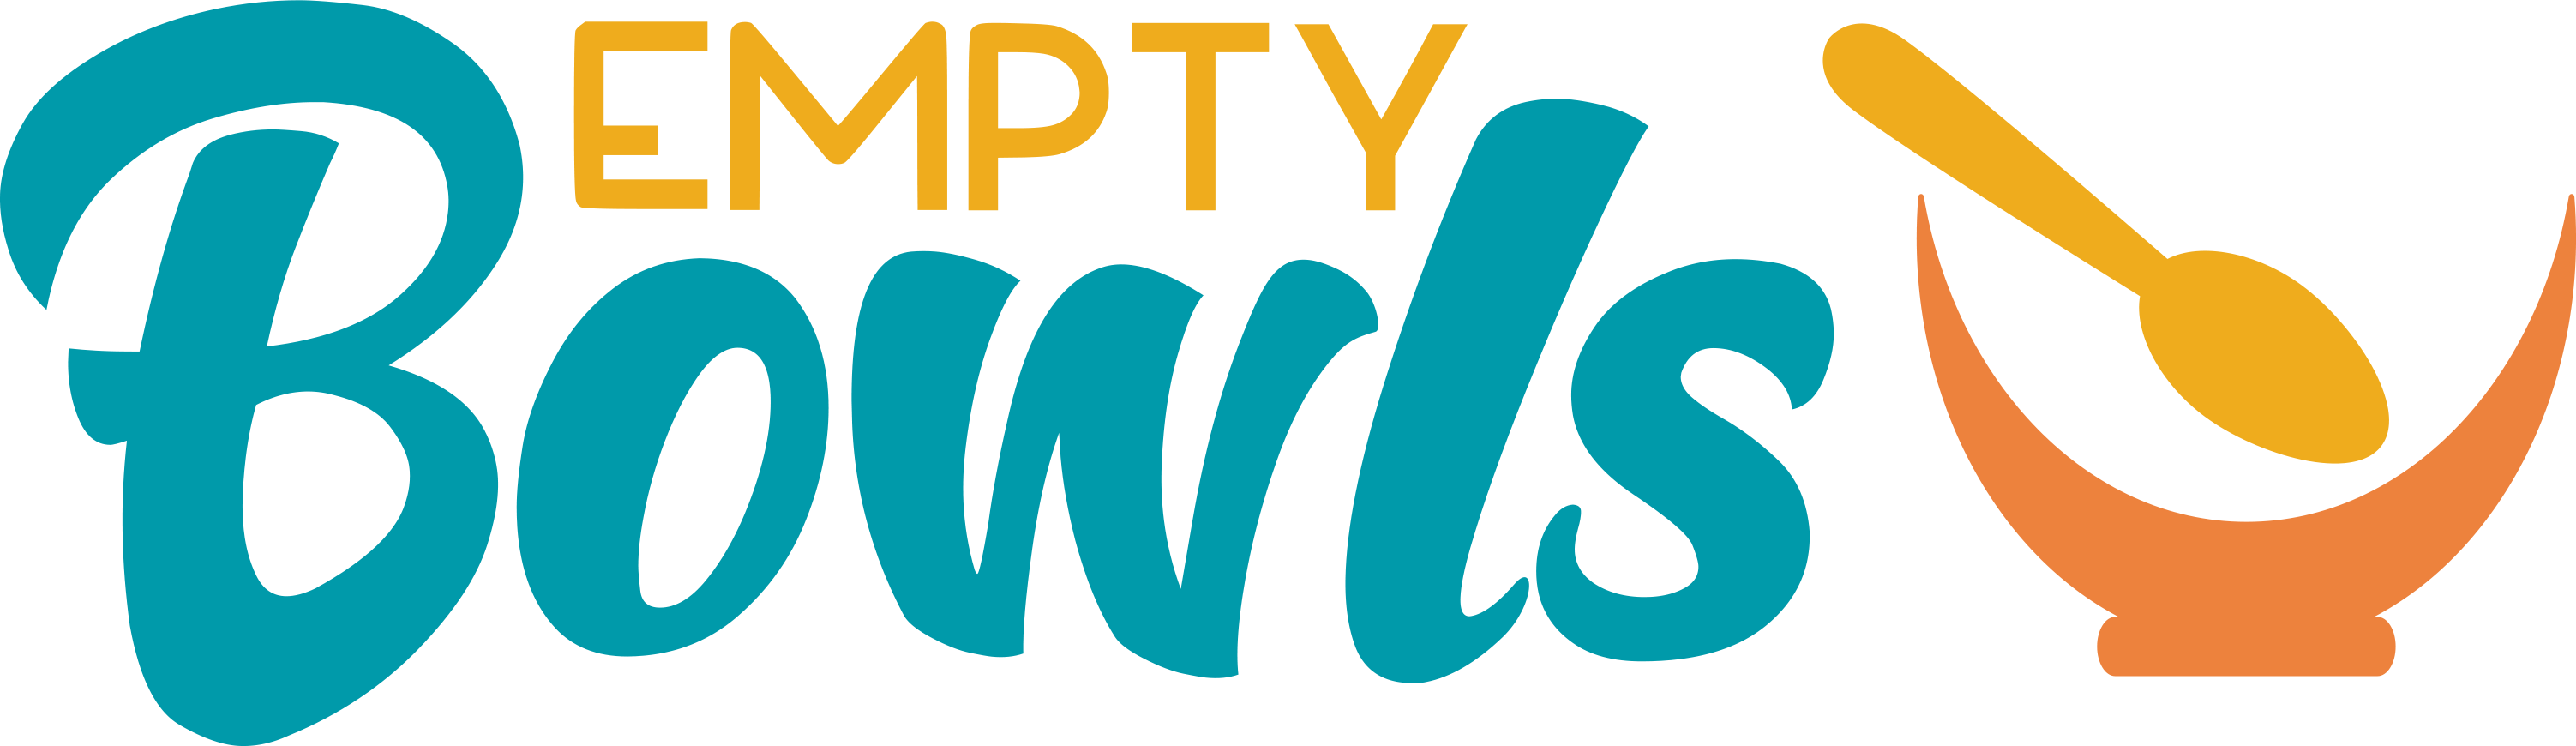 emptybowls-logo-1